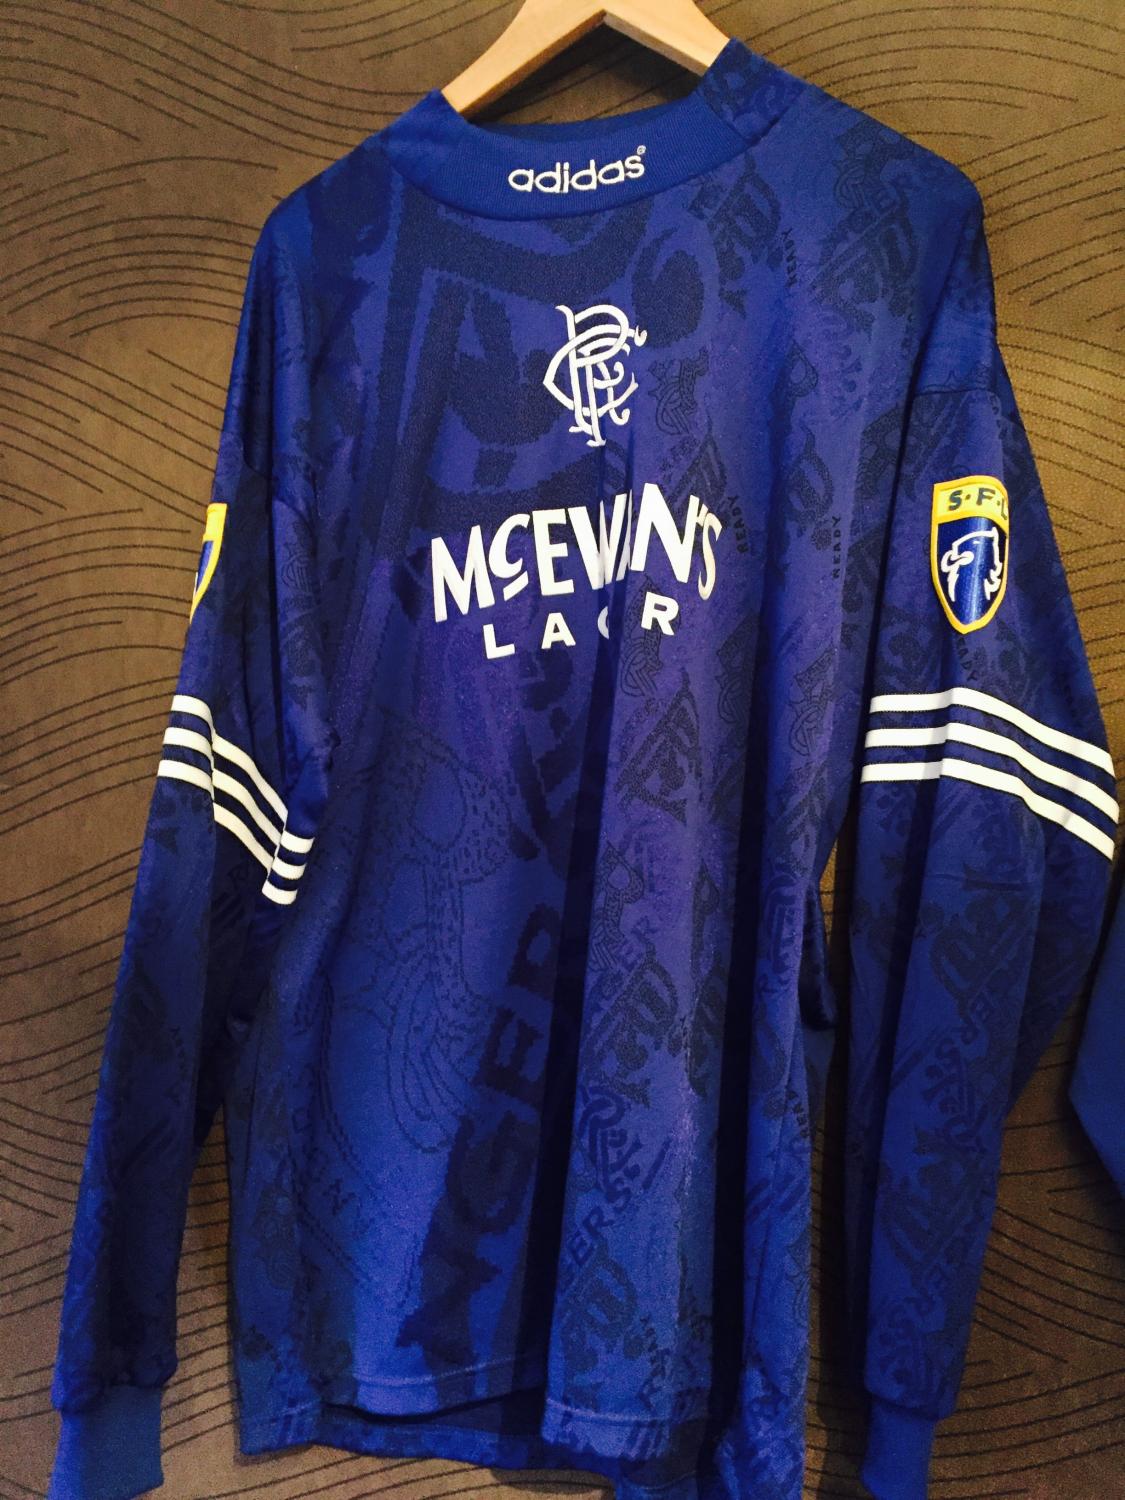 Rangers Home maglia di calcio 1994 - 1996. Sponsored by McEwan's